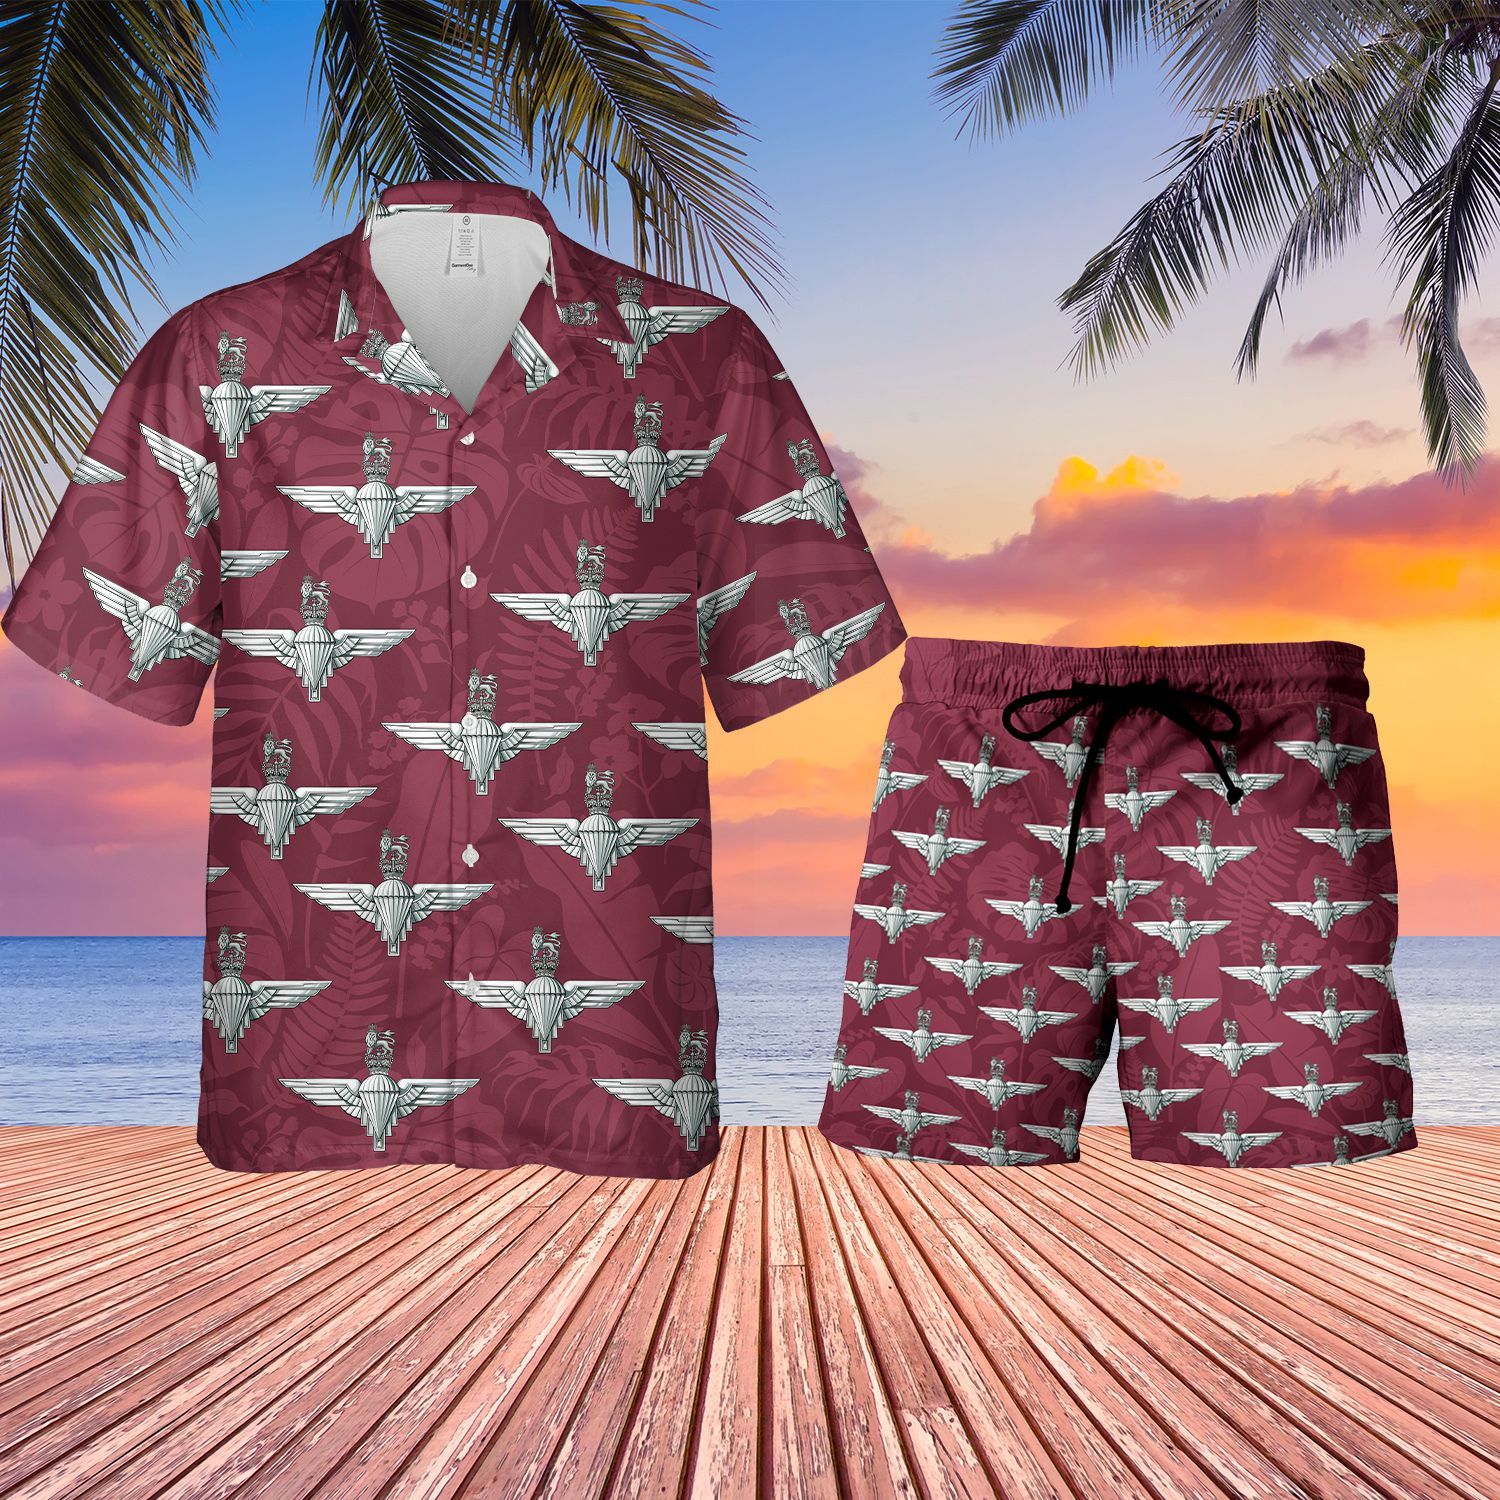 Enjoy your summer with top cool hawaiian shirt below 282